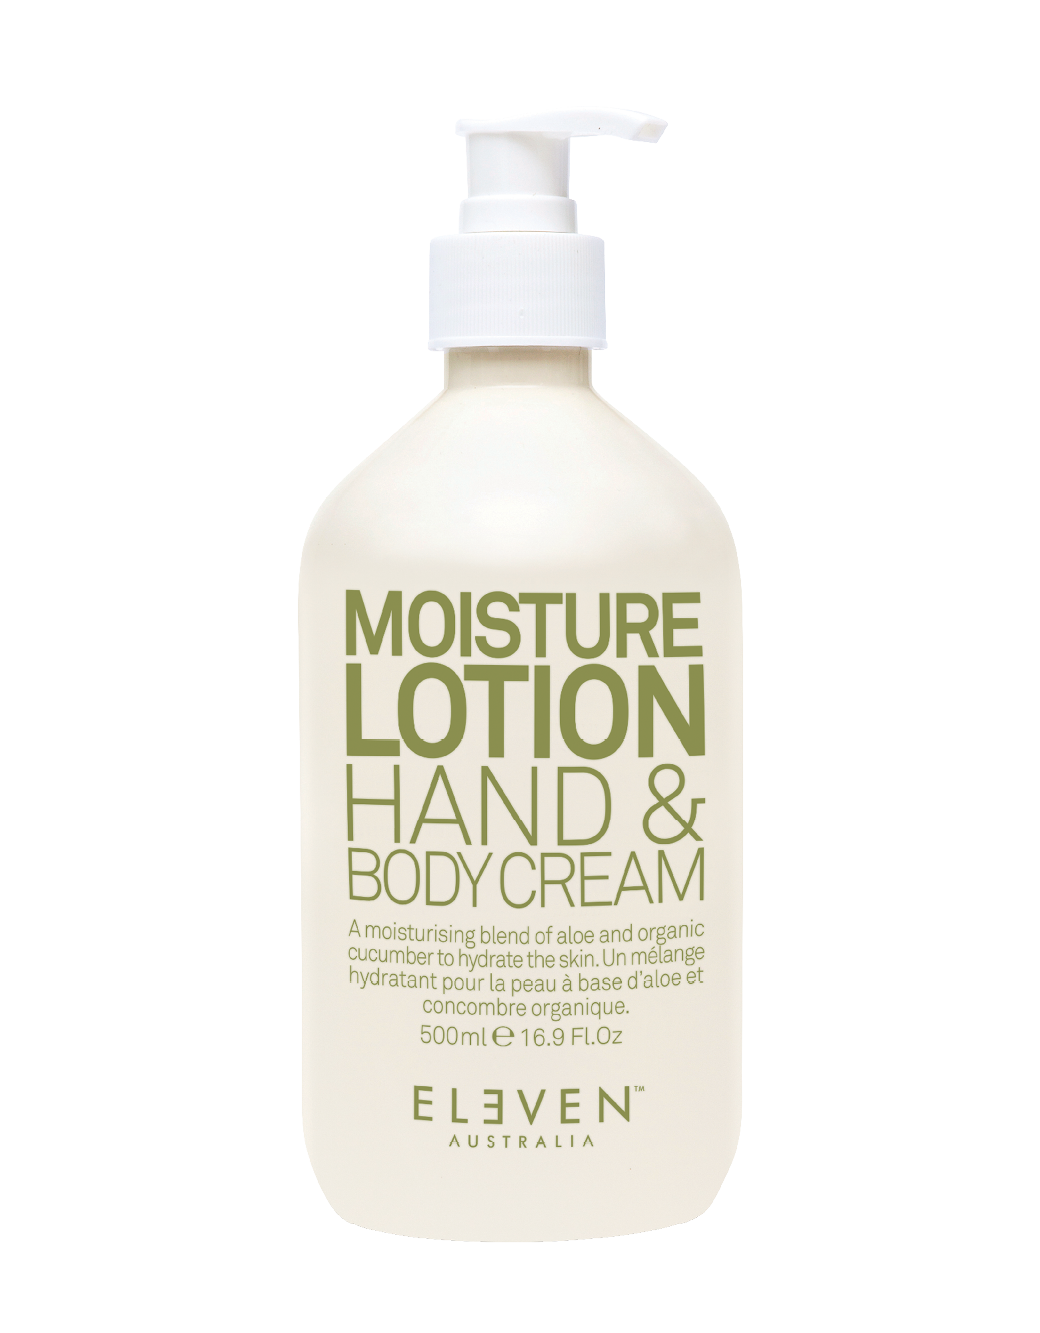 Moisture Lotion Hand & Body Cream 500ml